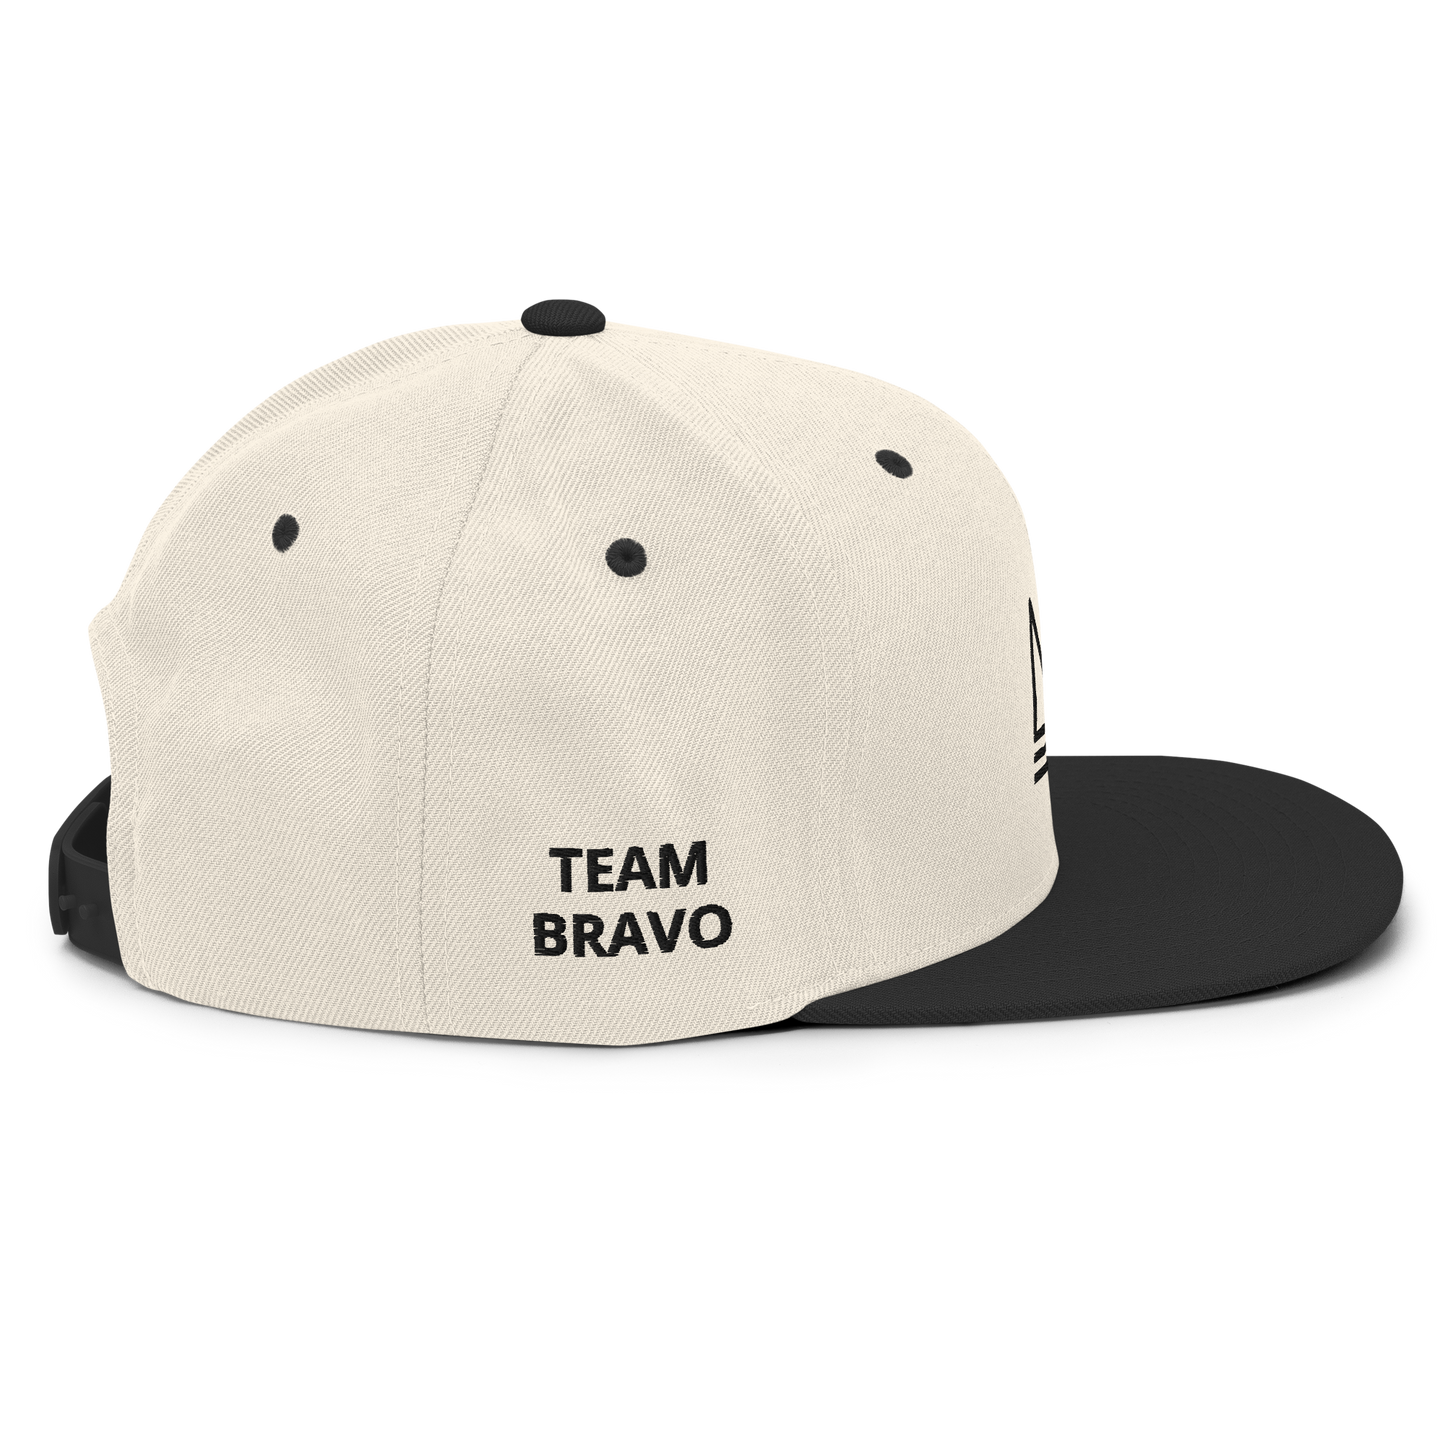 Team Bravo Snapback Hat White & Black